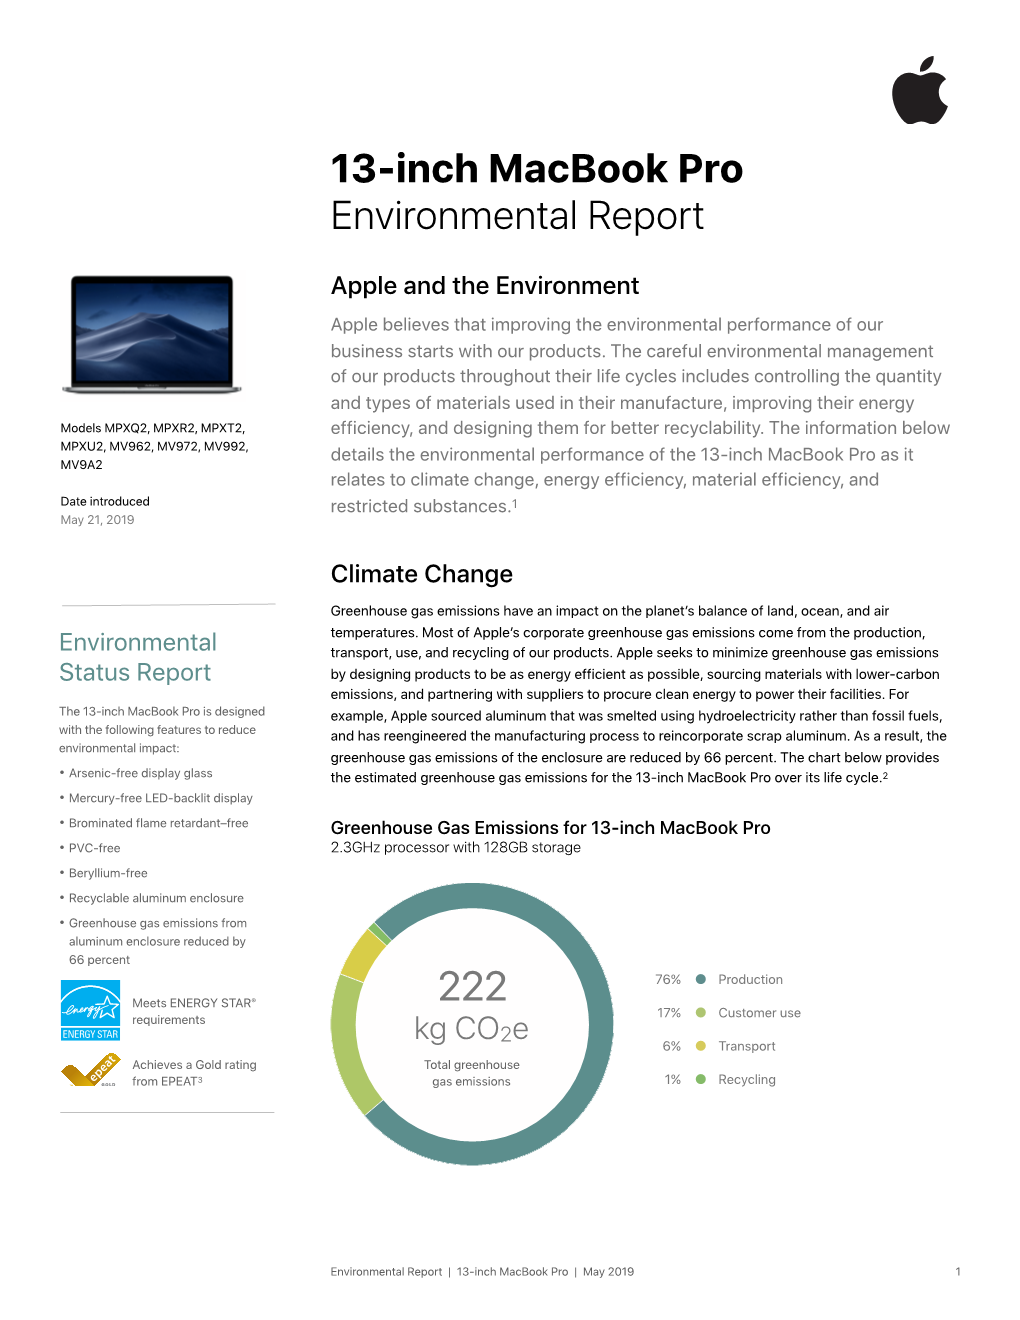 13-Inch Macbook Pro Environmental Report May 2019